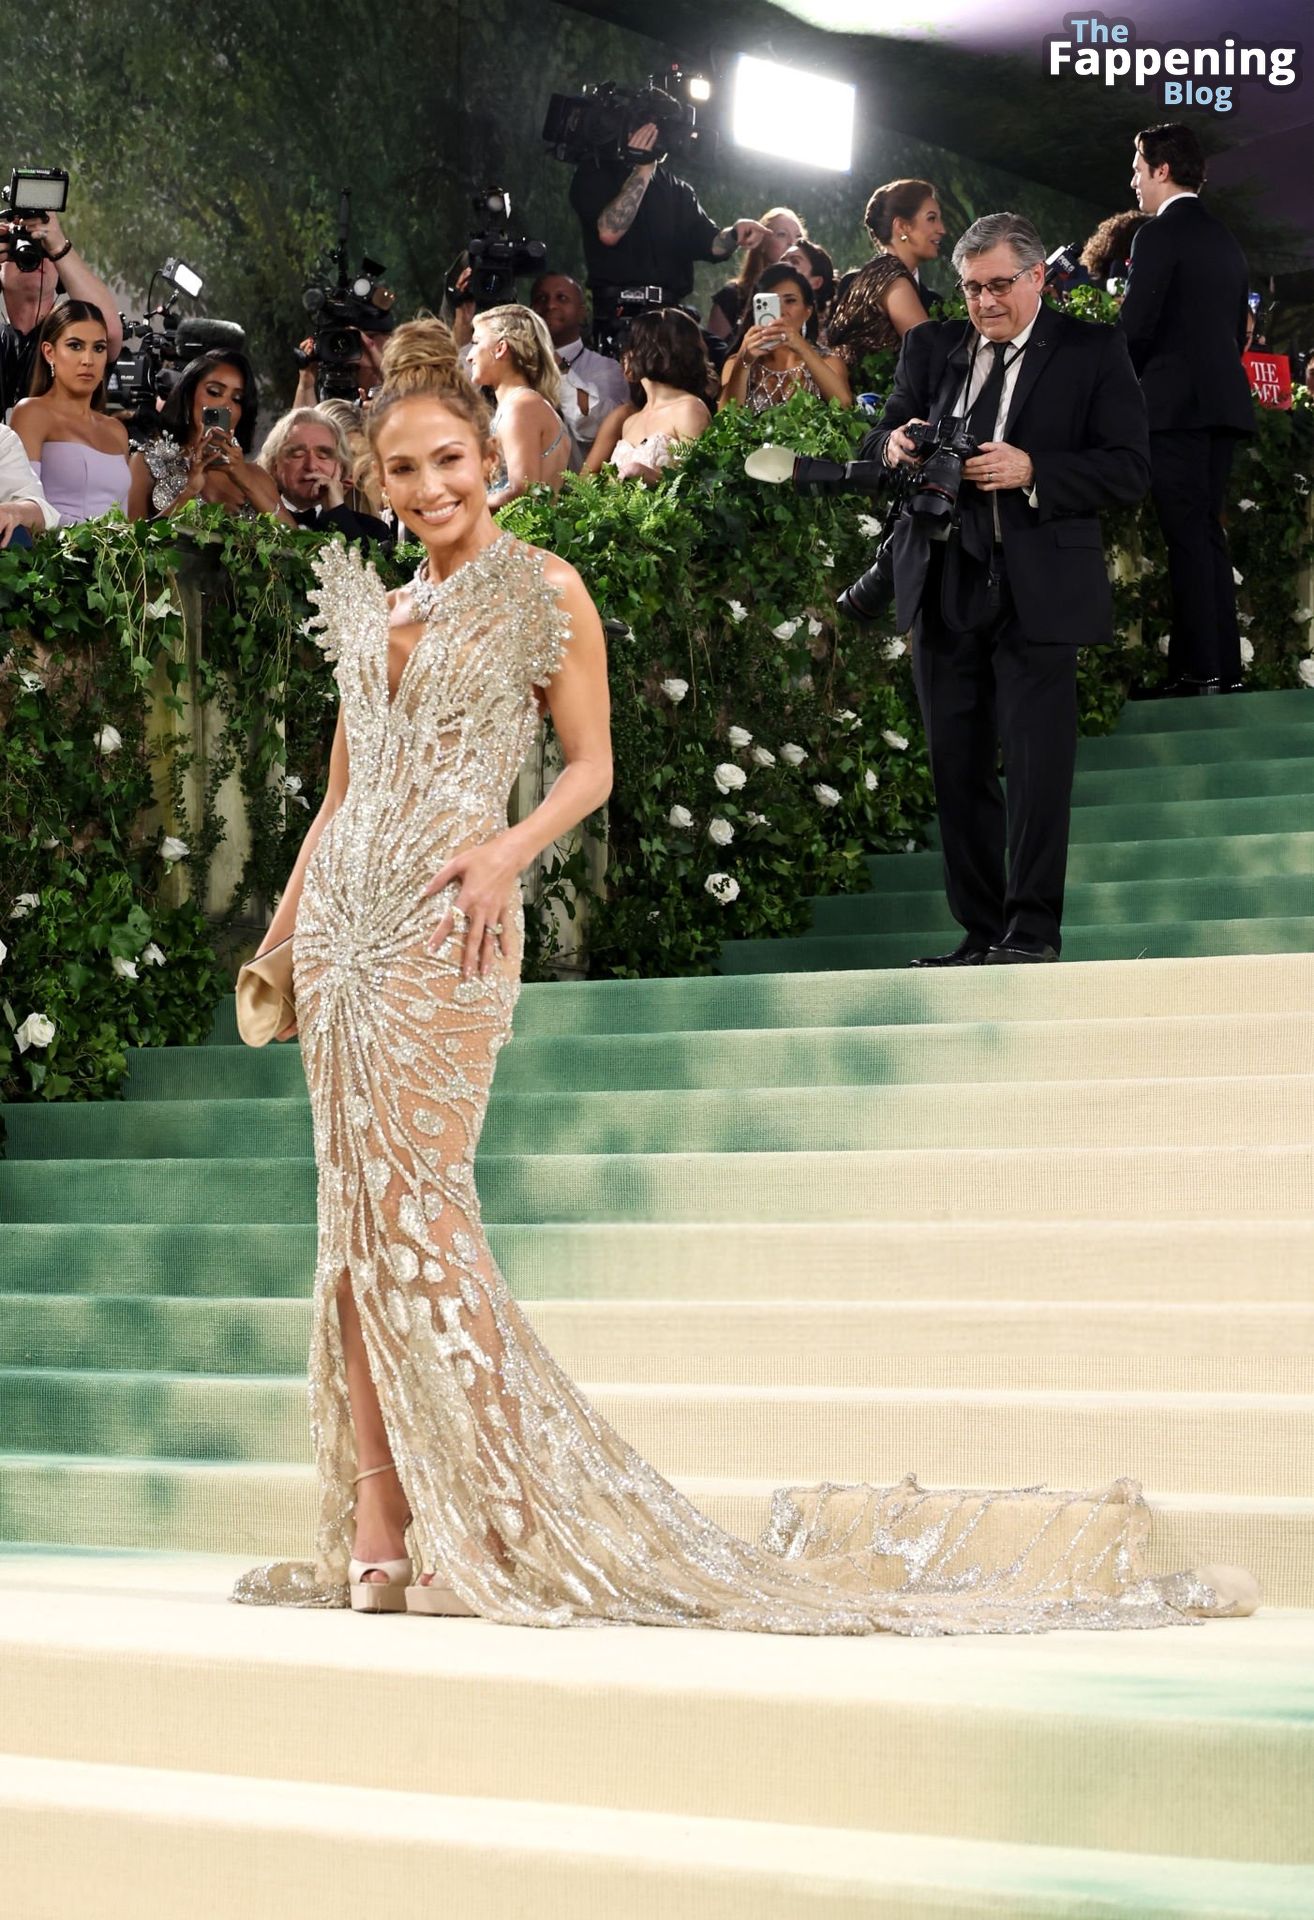 Jennifer-Lopez-Hot-59-The-Fappening-Blog.jpg